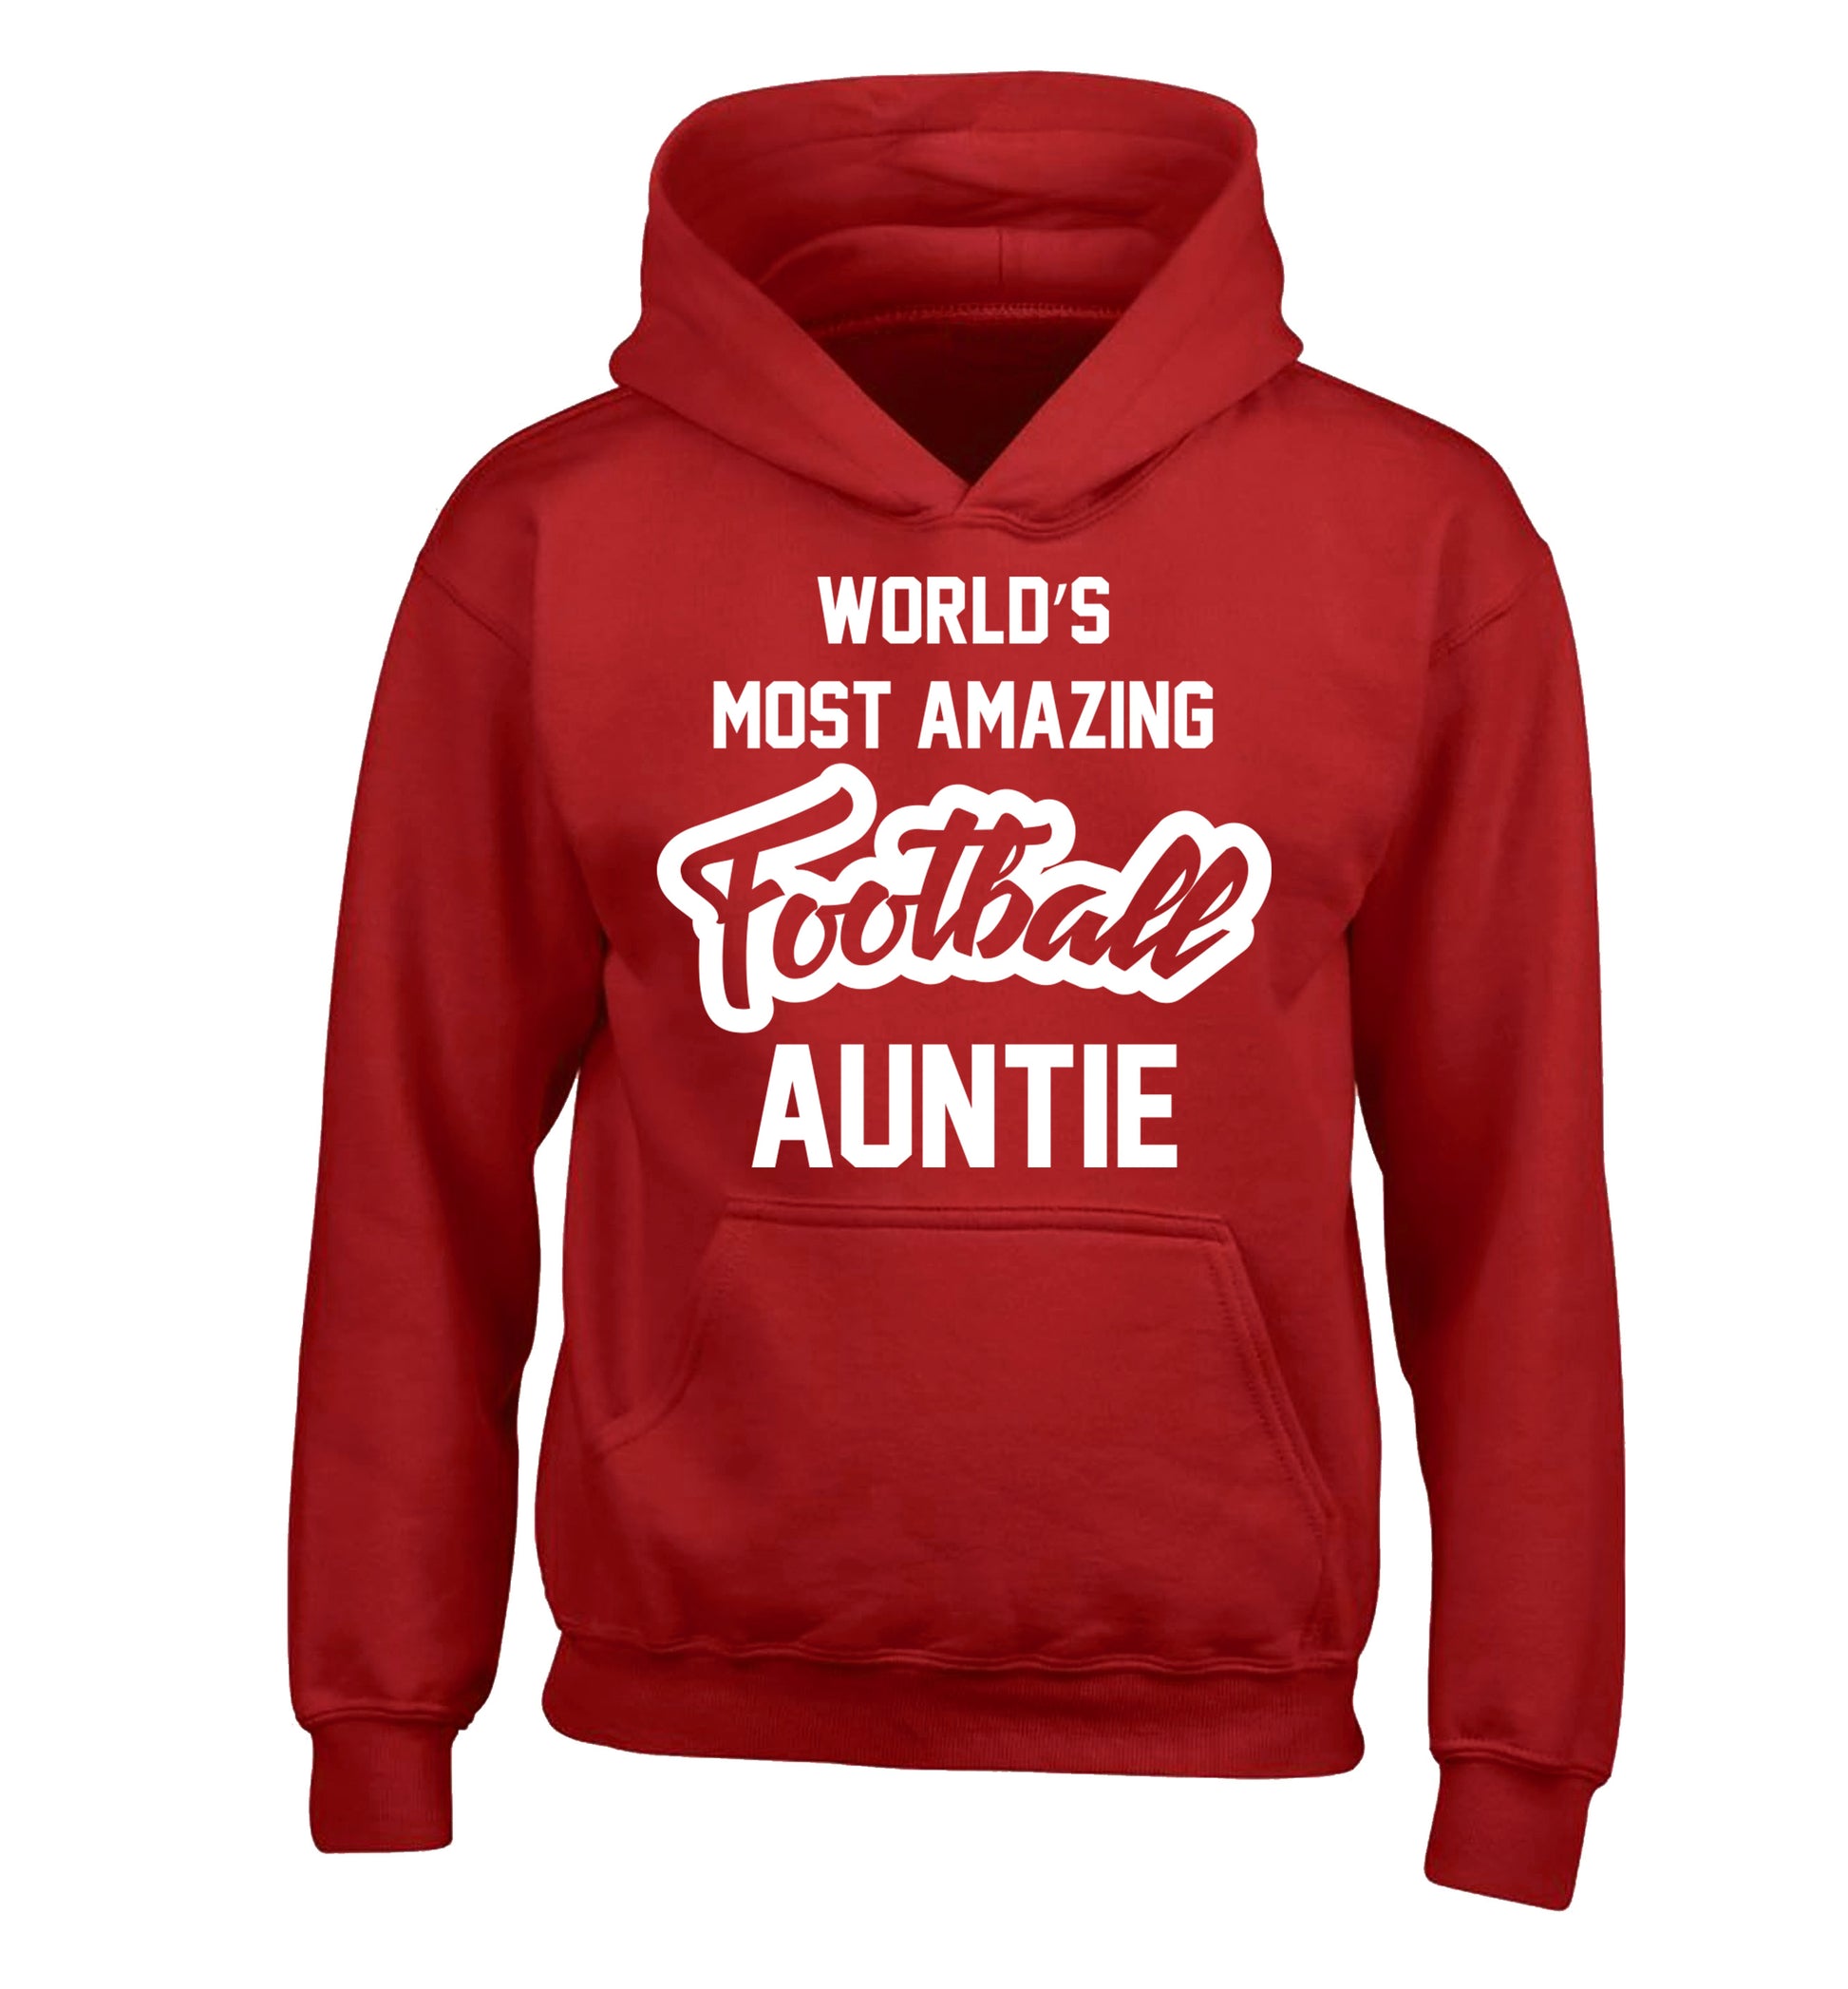 Worlds most amazing football auntie children's red hoodie 12-14 Years